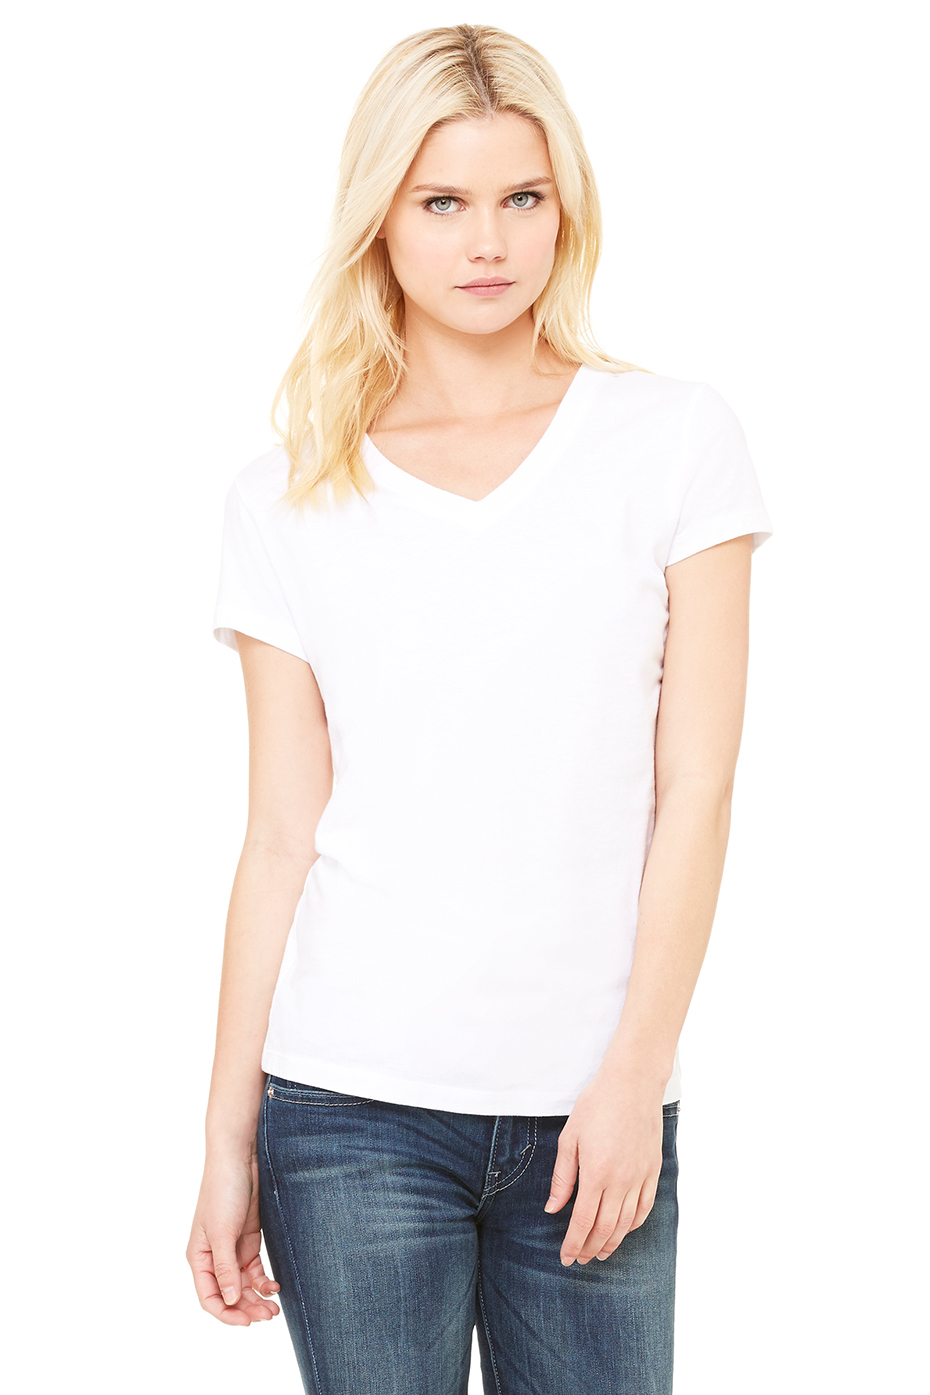 Buy > bella canvas women's shirt size chart > in stock